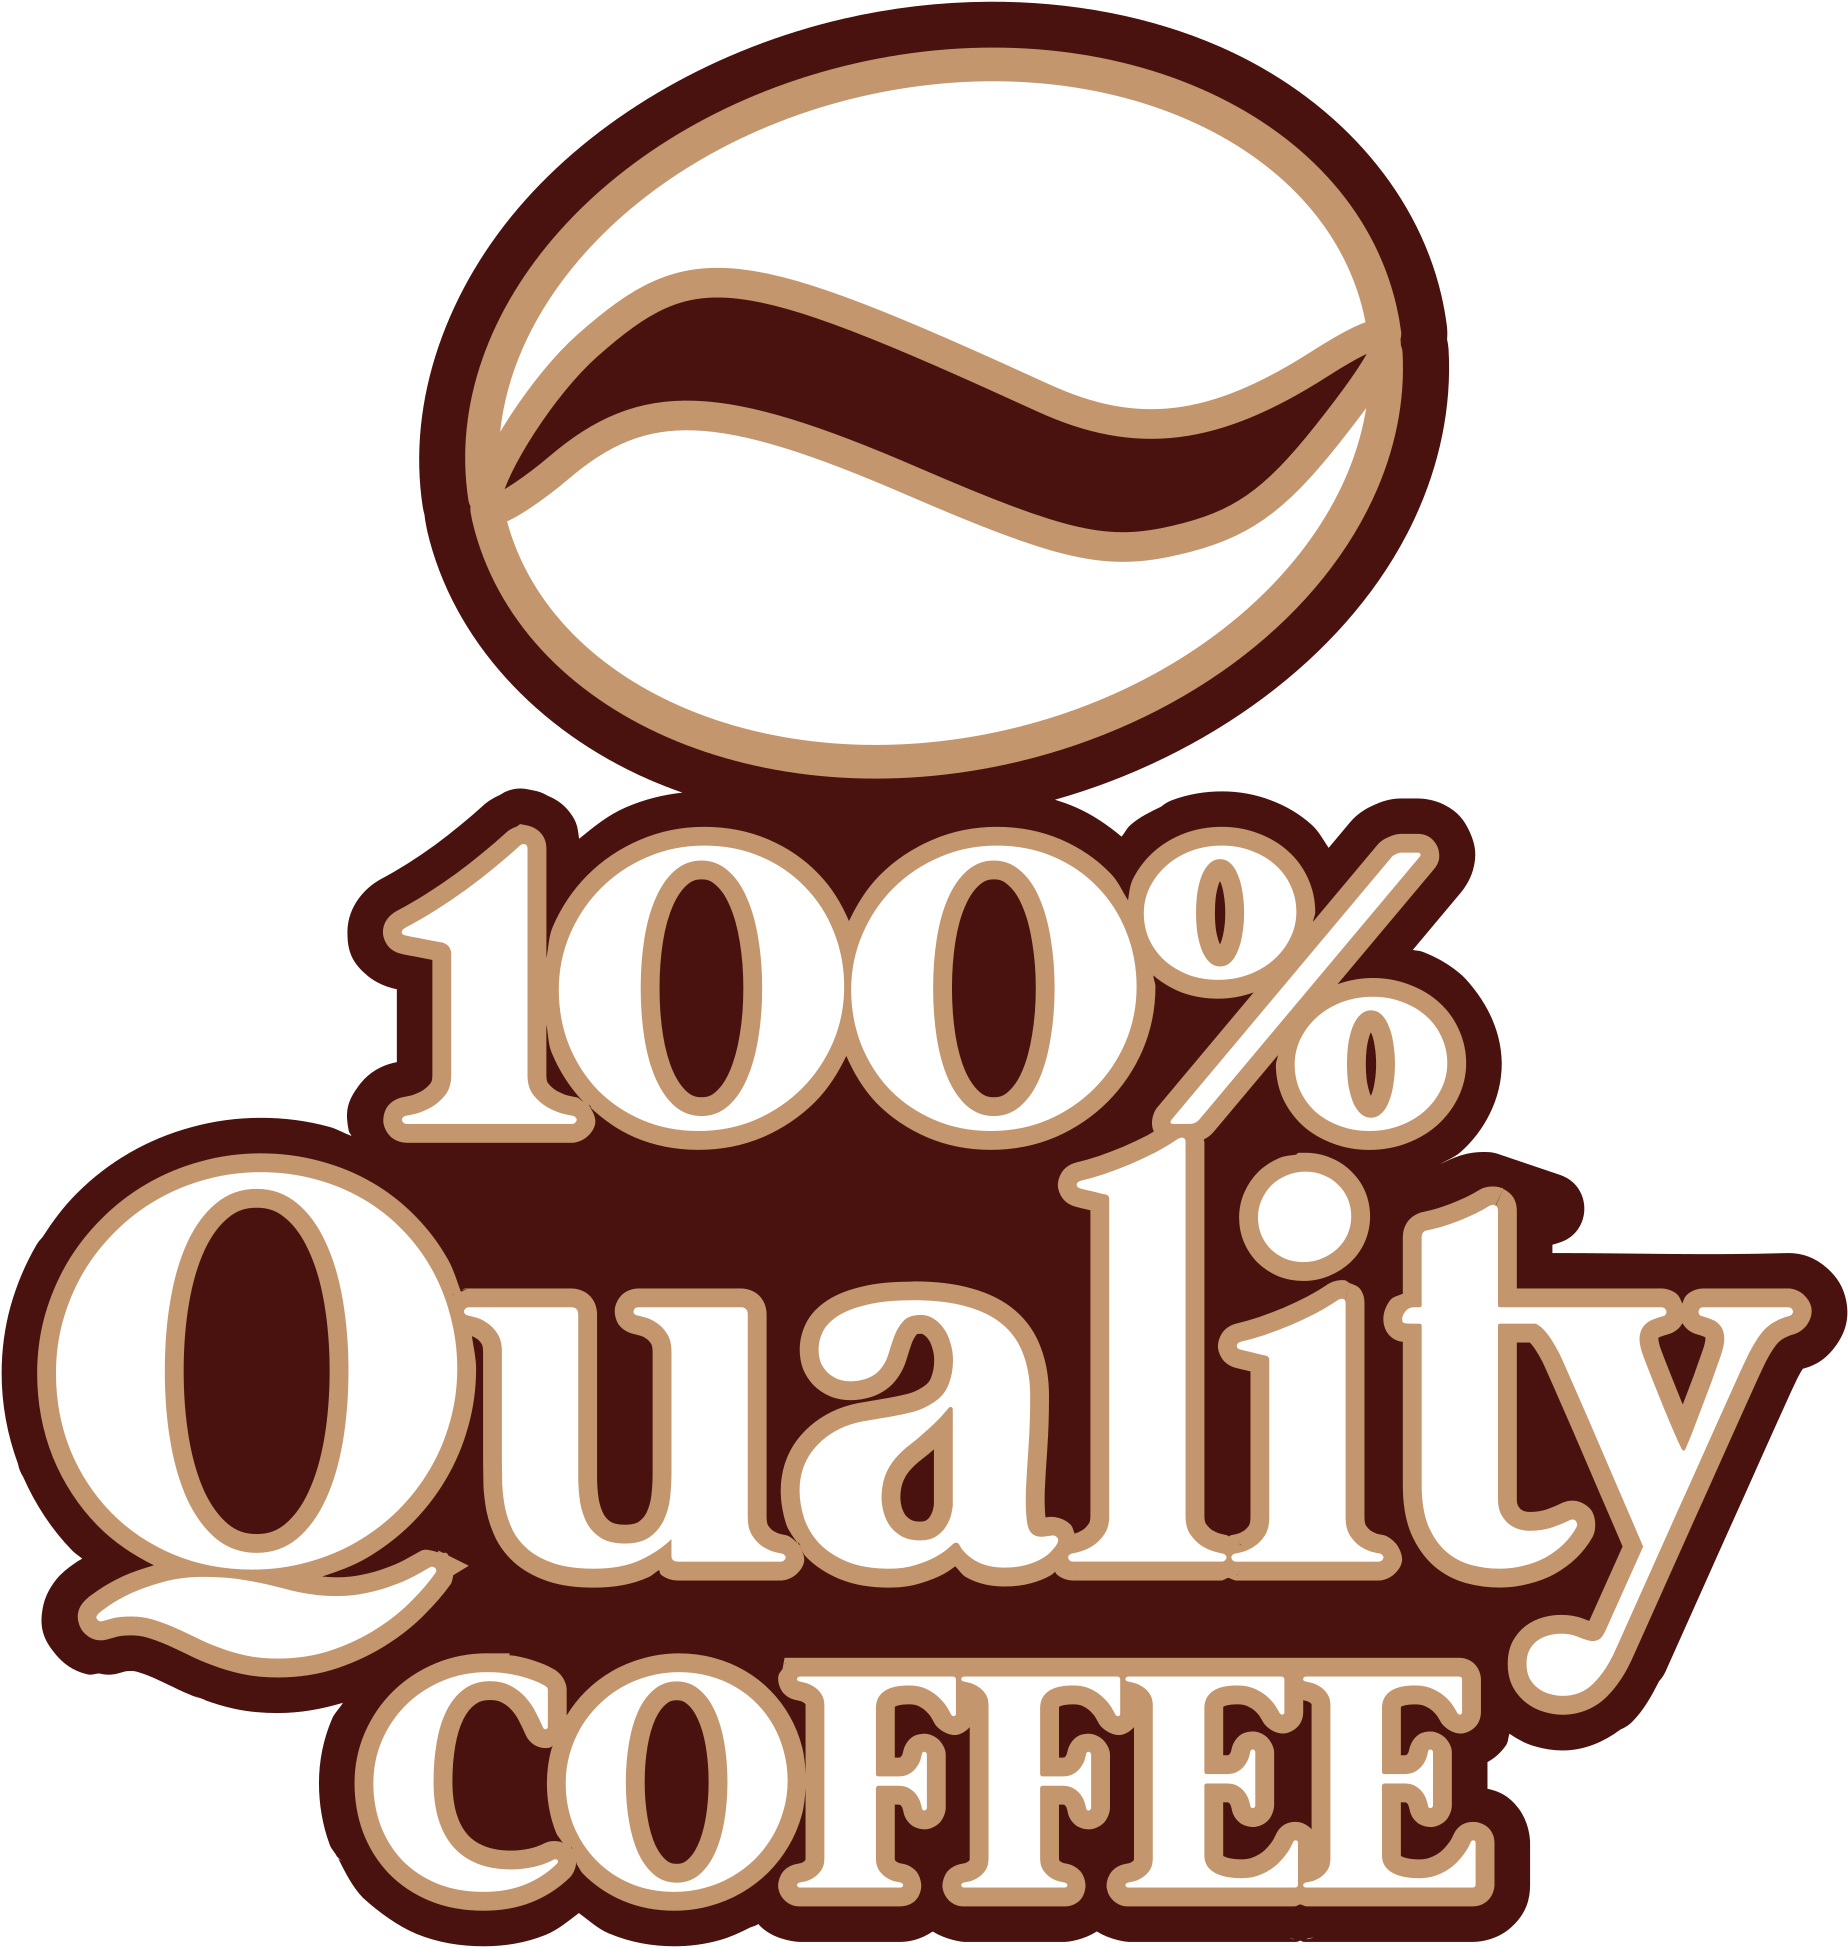 Quality Coffee - Quality Coffee (2383x2400)